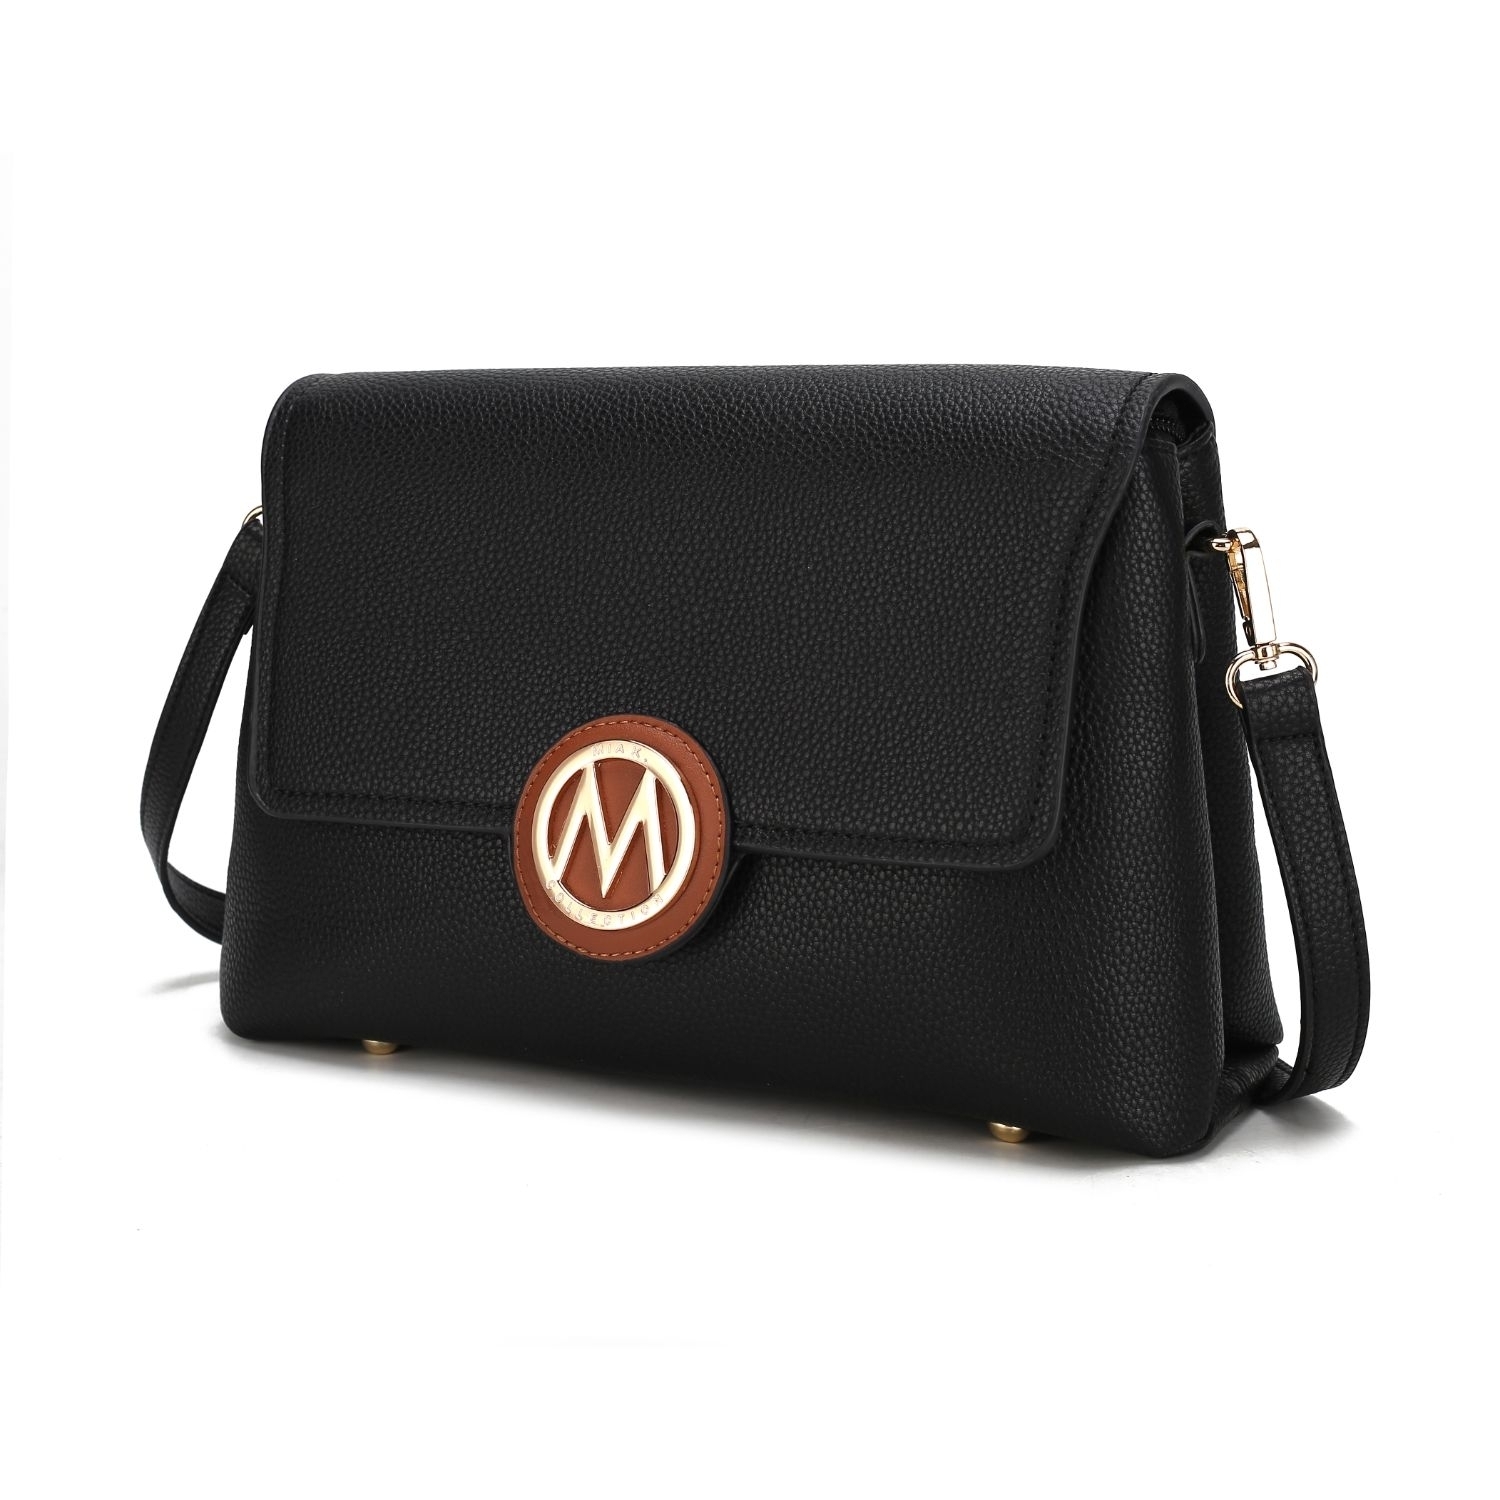 MKF Collection Johanna Multi Compartment Crossbody Handbag By Mia K - Yellow-olive